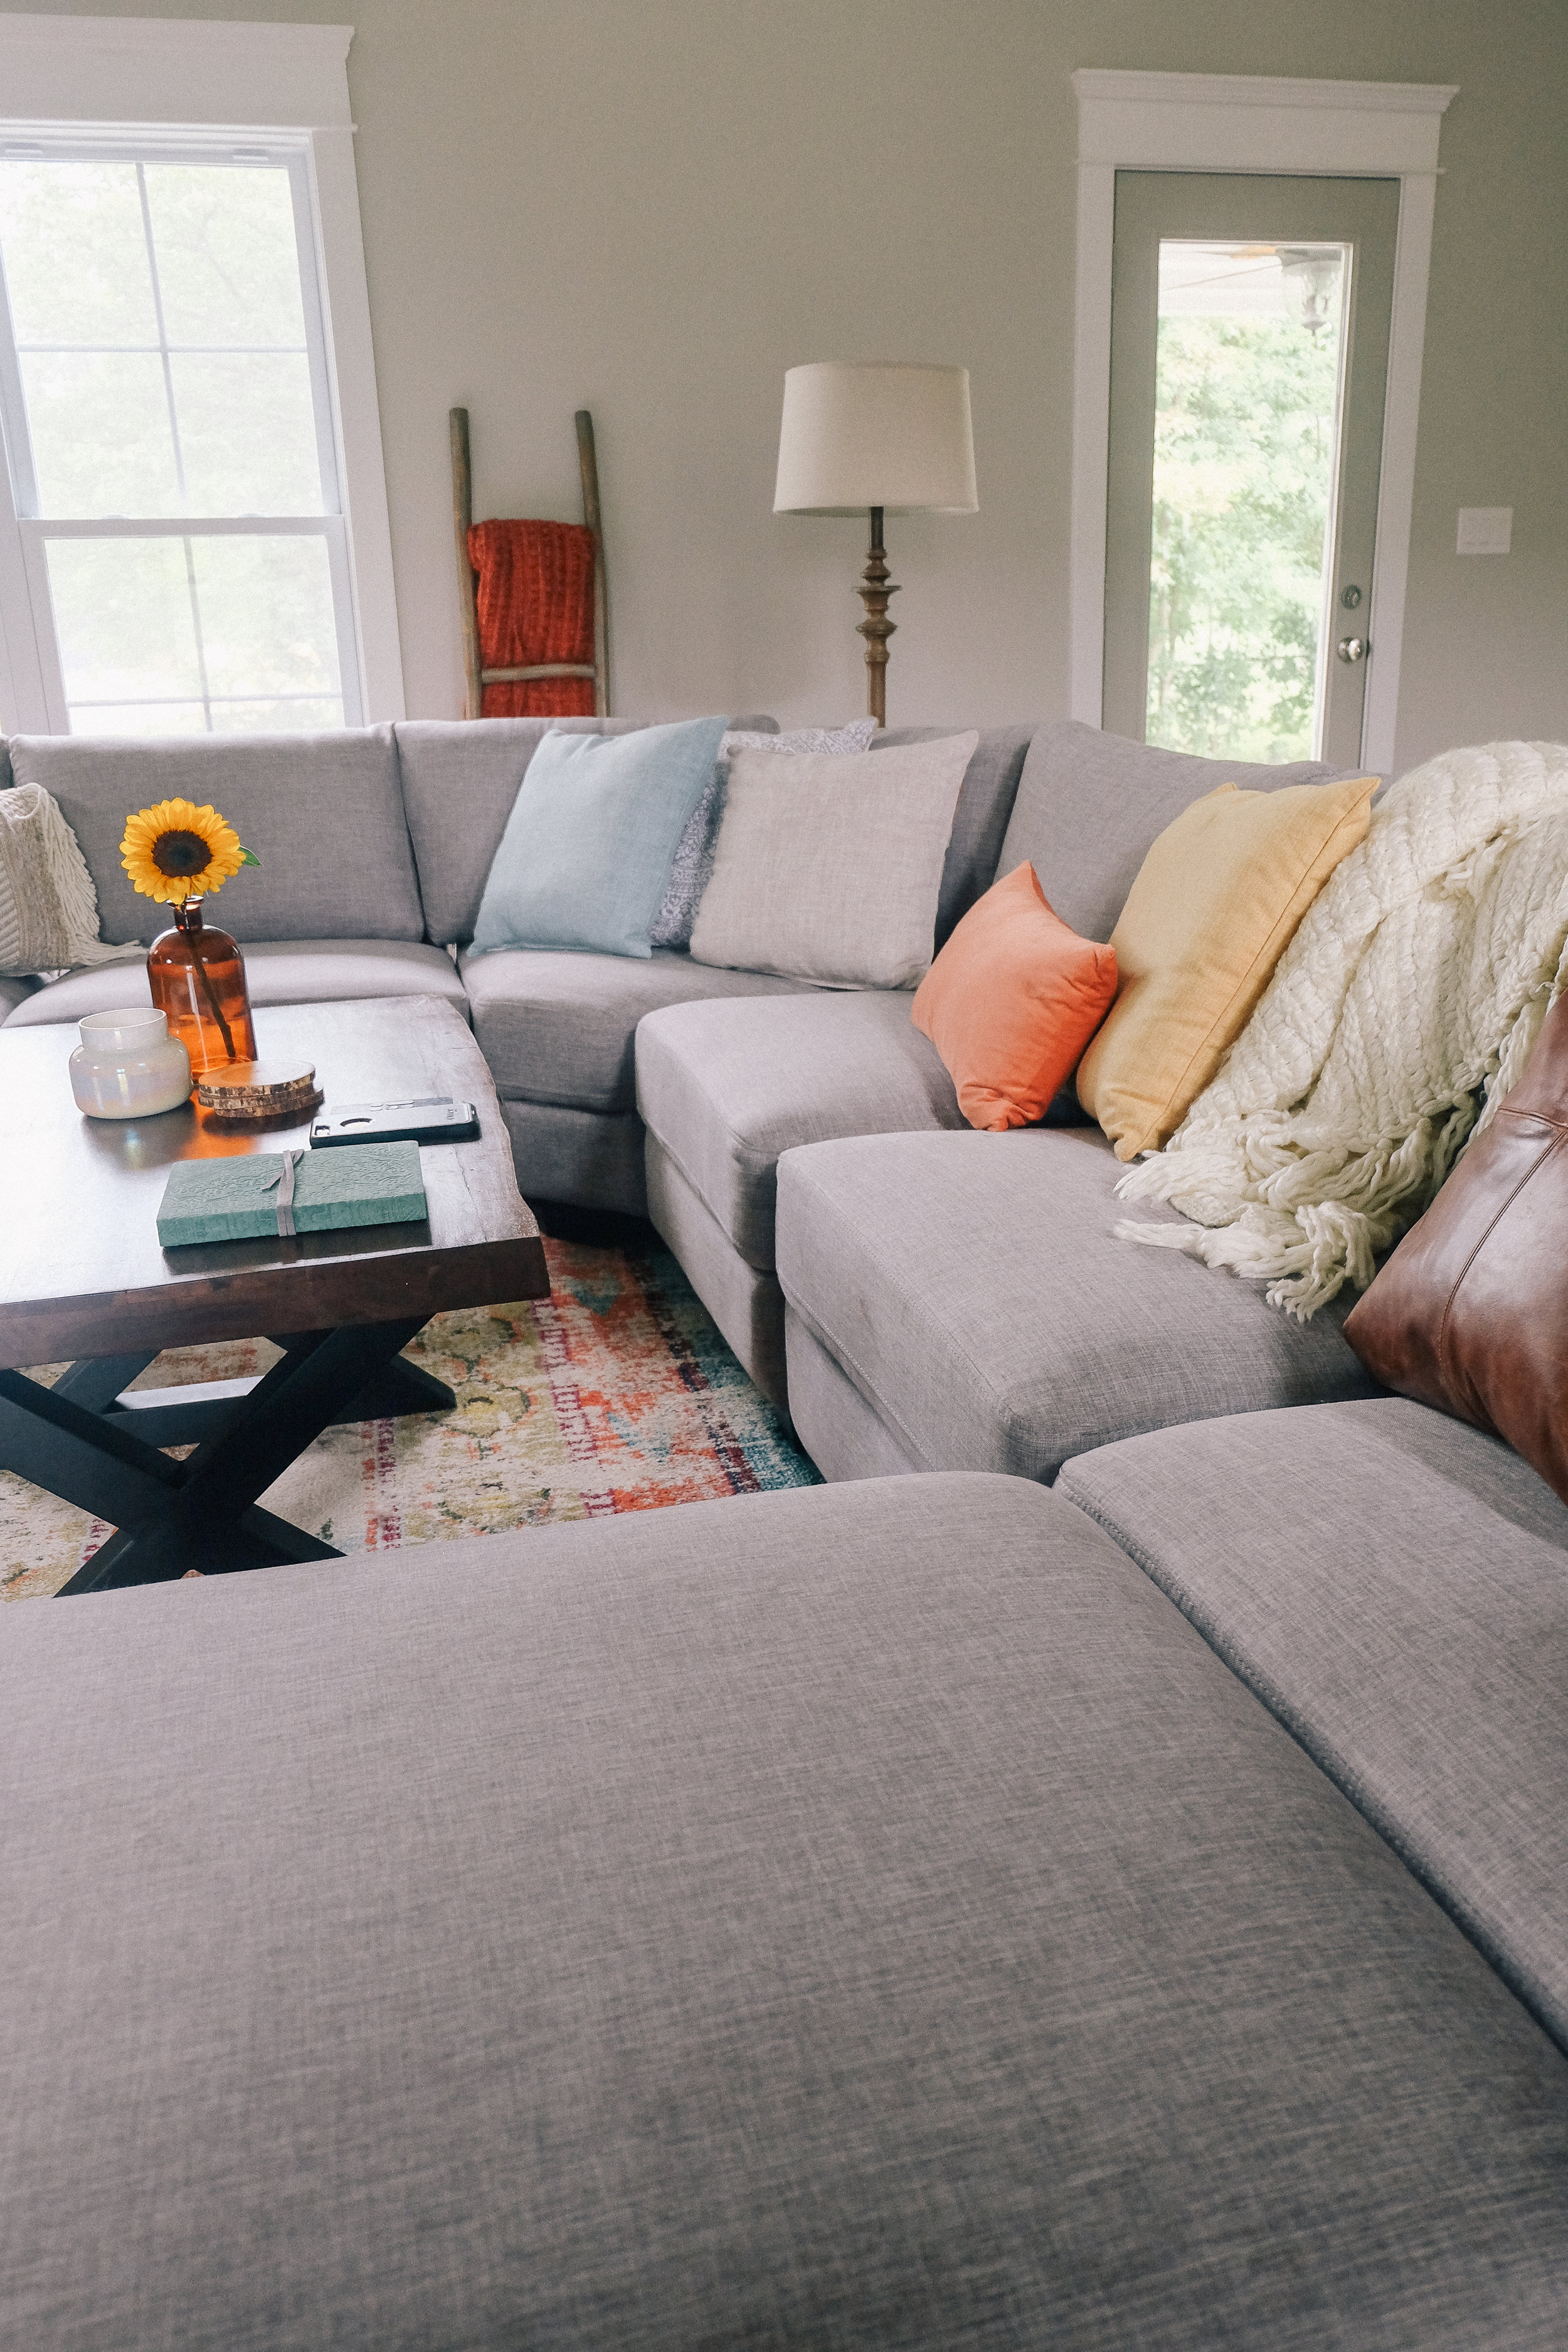 Cozy Living Room Reveal With World Market via chelceytate.com